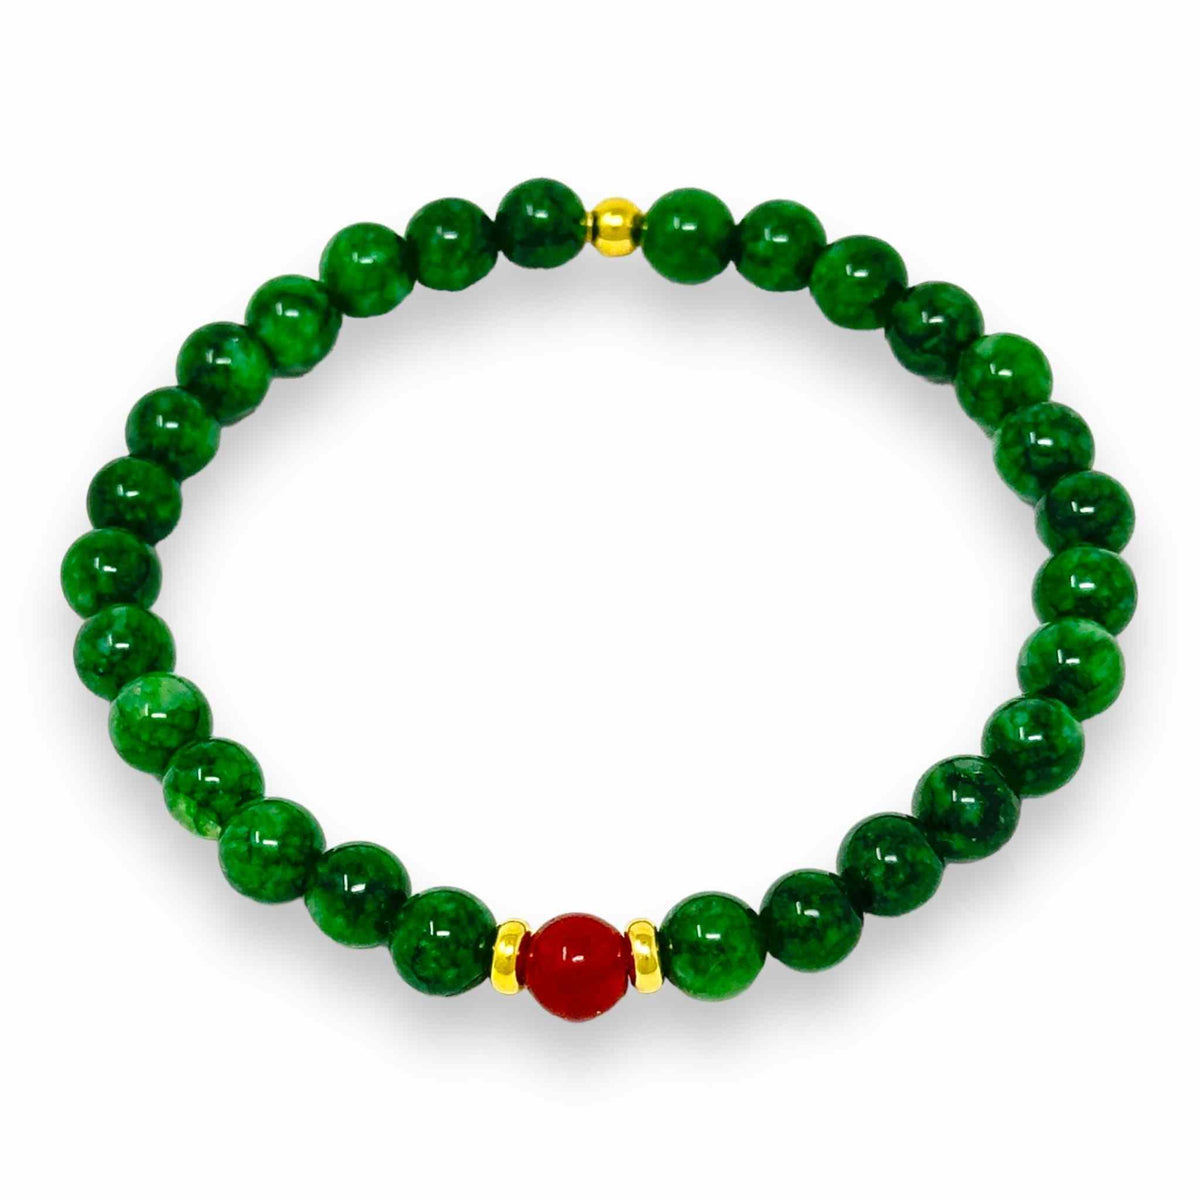 Green jade bracelet with red gemstone on white background